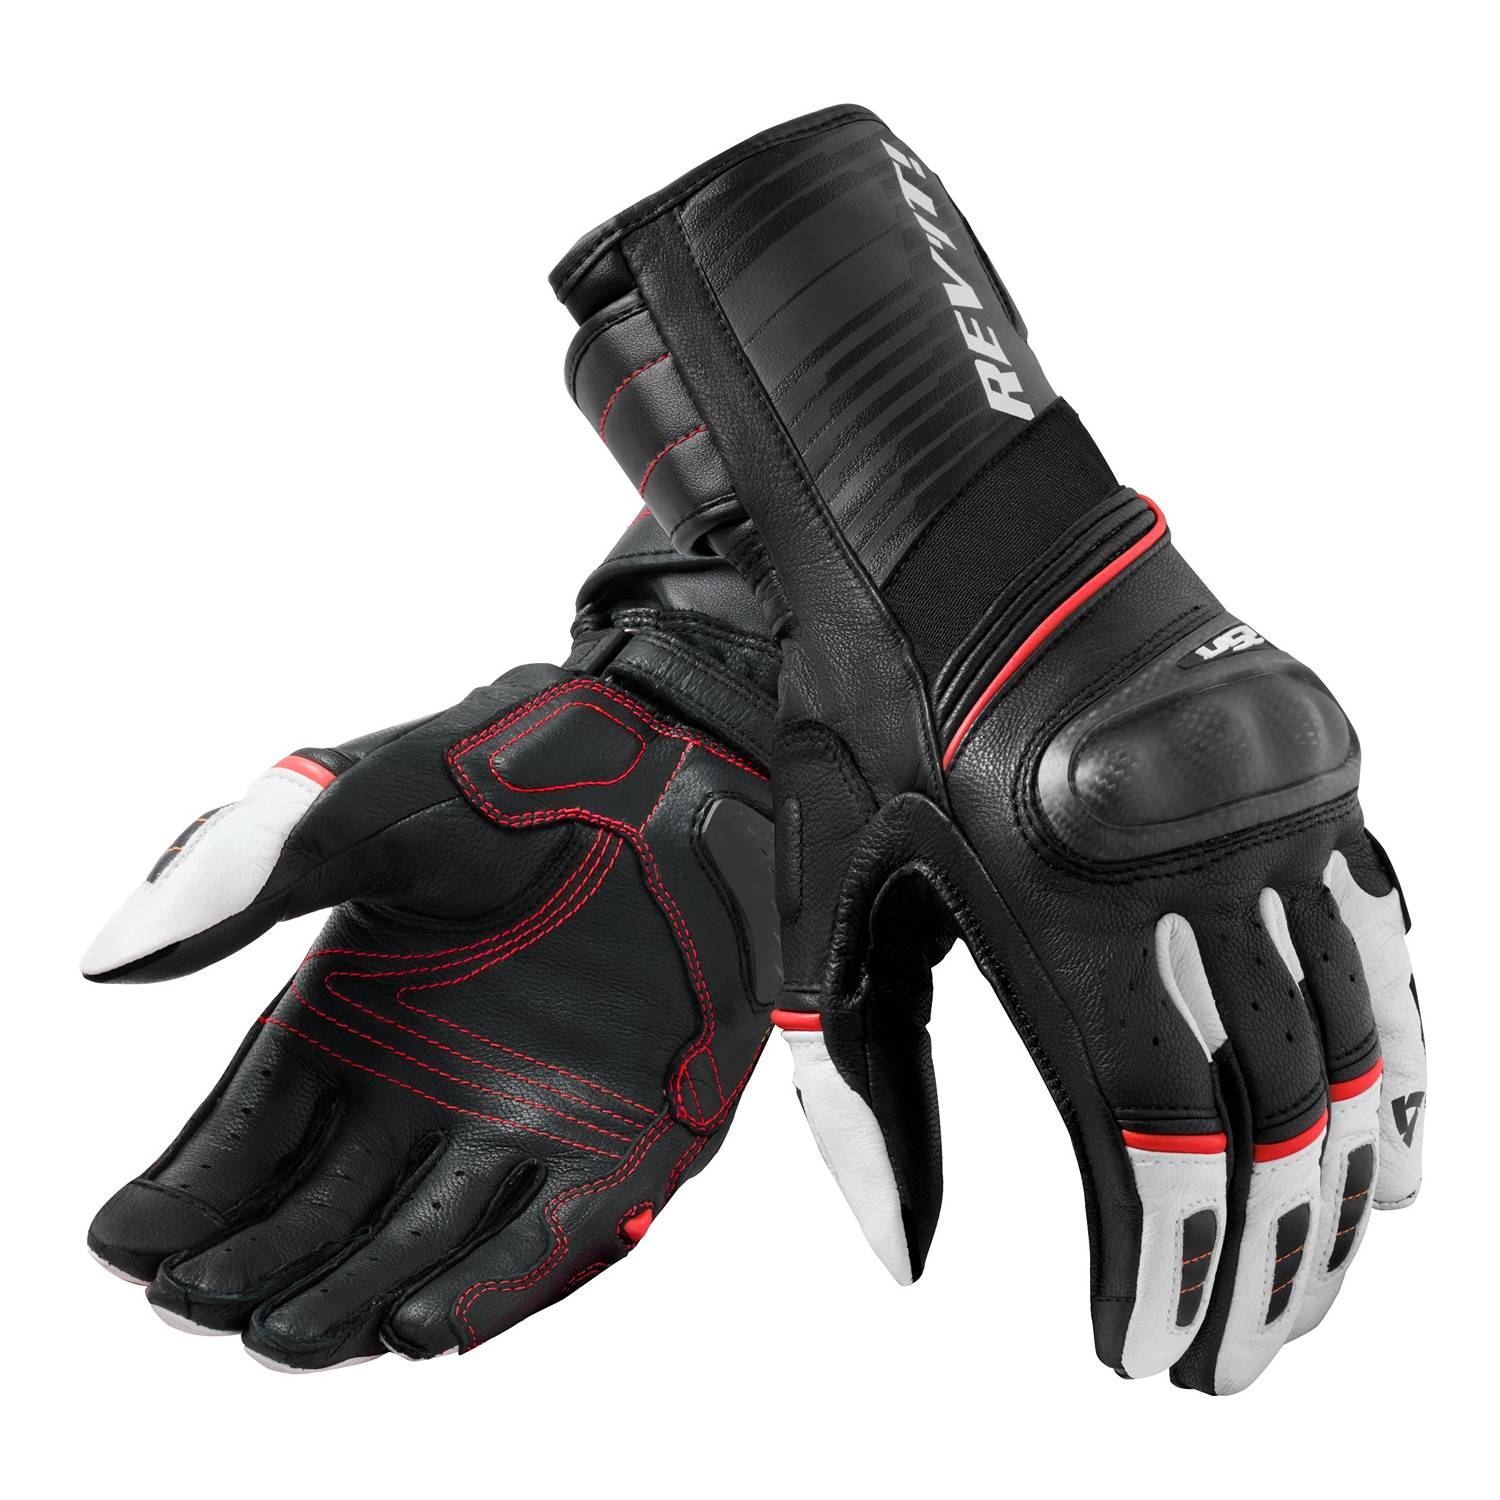 Image of REV'IT! RSR 4 Gloves Black White Size 2XL ID 8700001306775